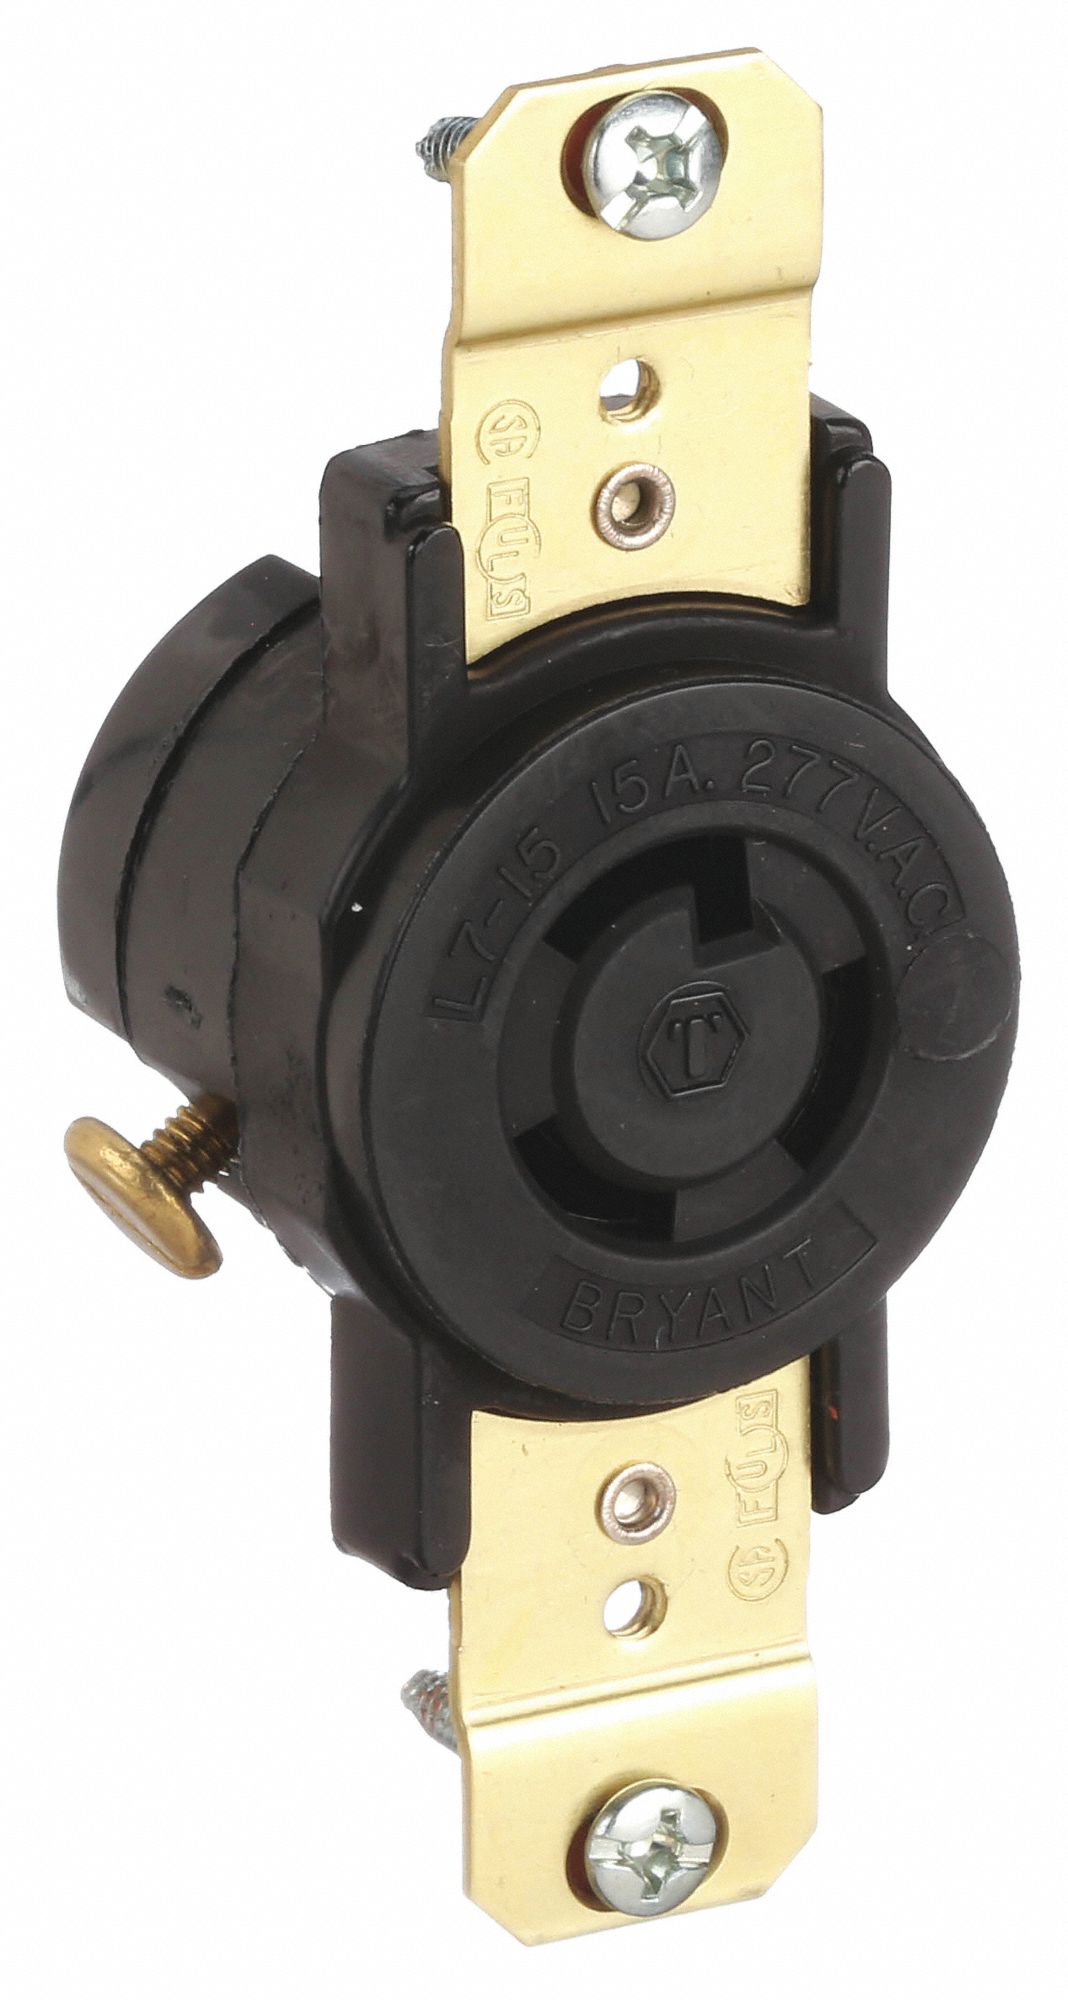 BRYANT Black Locking Receptacle, 15 Amps, 277V AC Voltage, NEMA